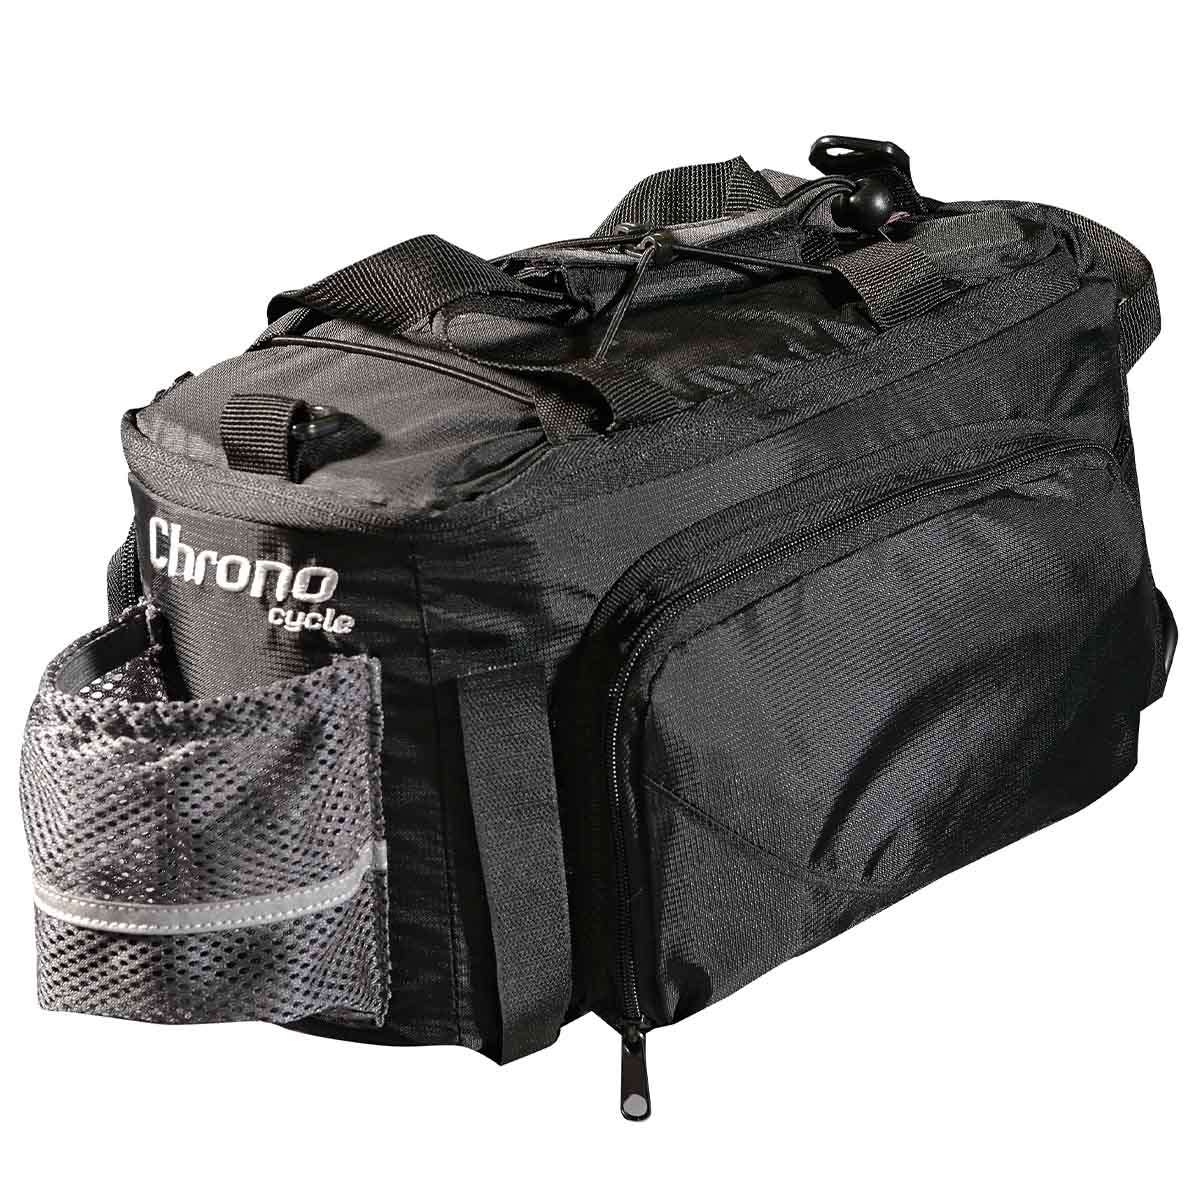 Spheik Chrono Cycle Bag - Black